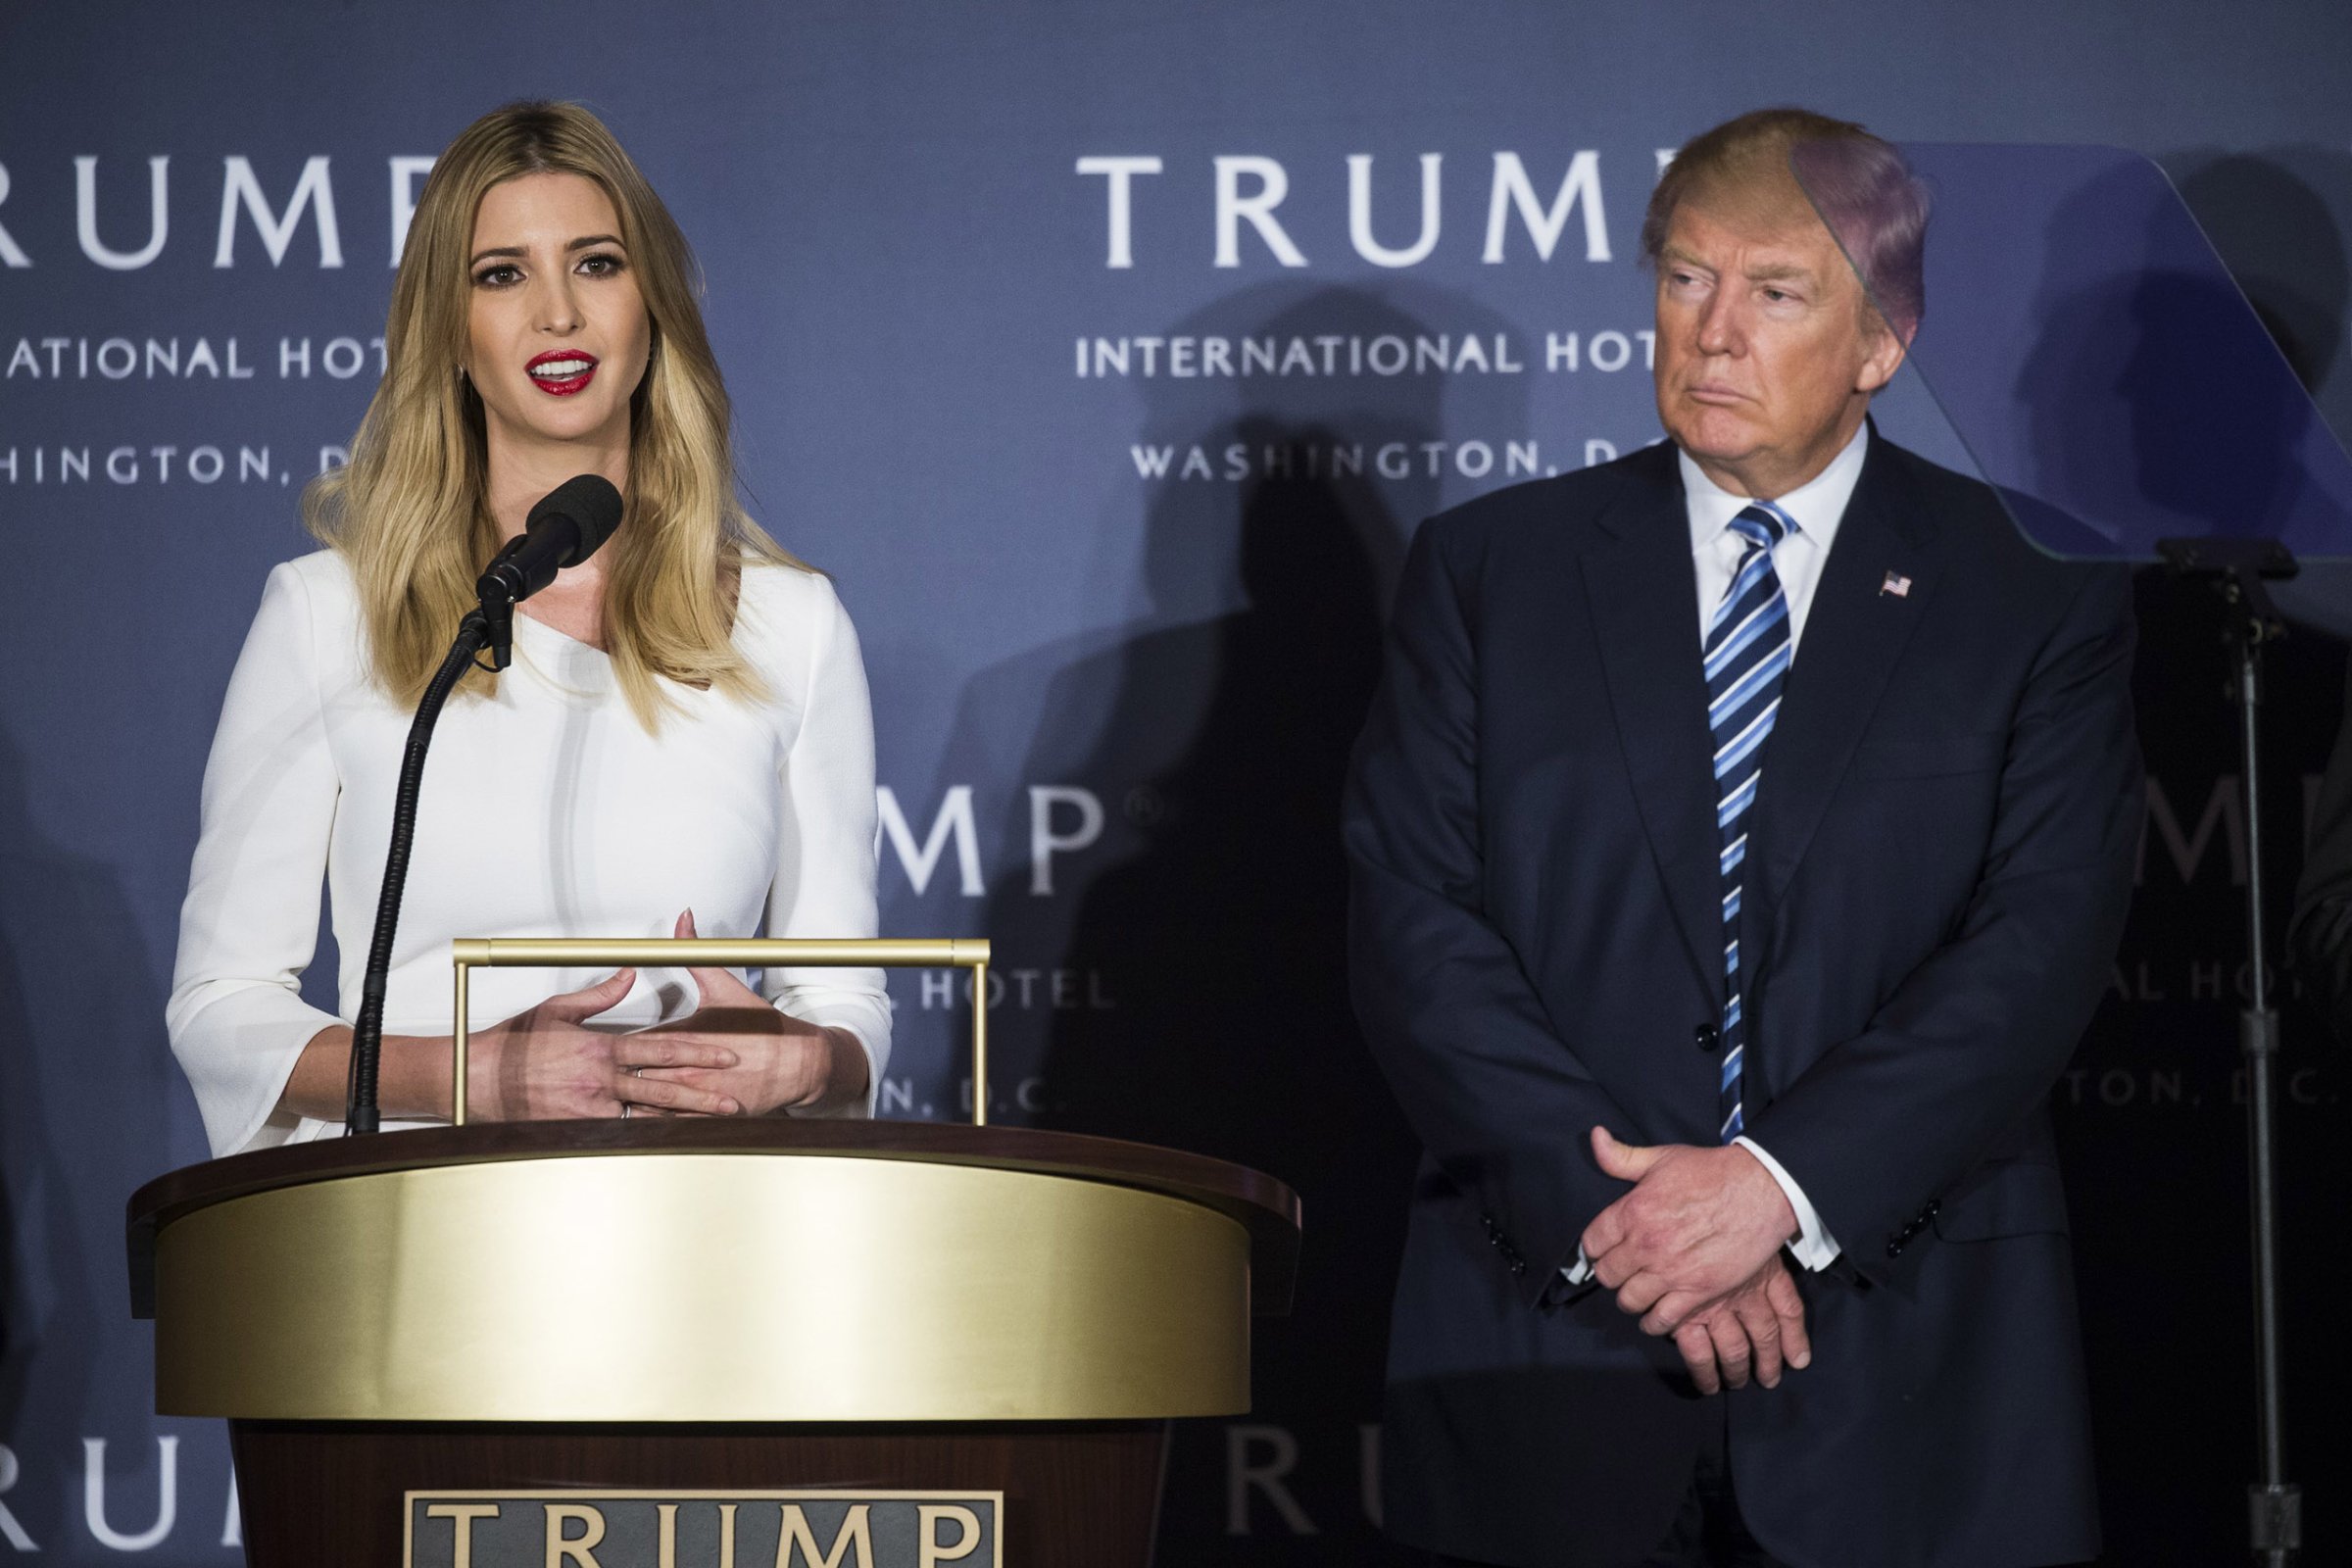 Donald Trump Opens Trump International Hotel in Washington